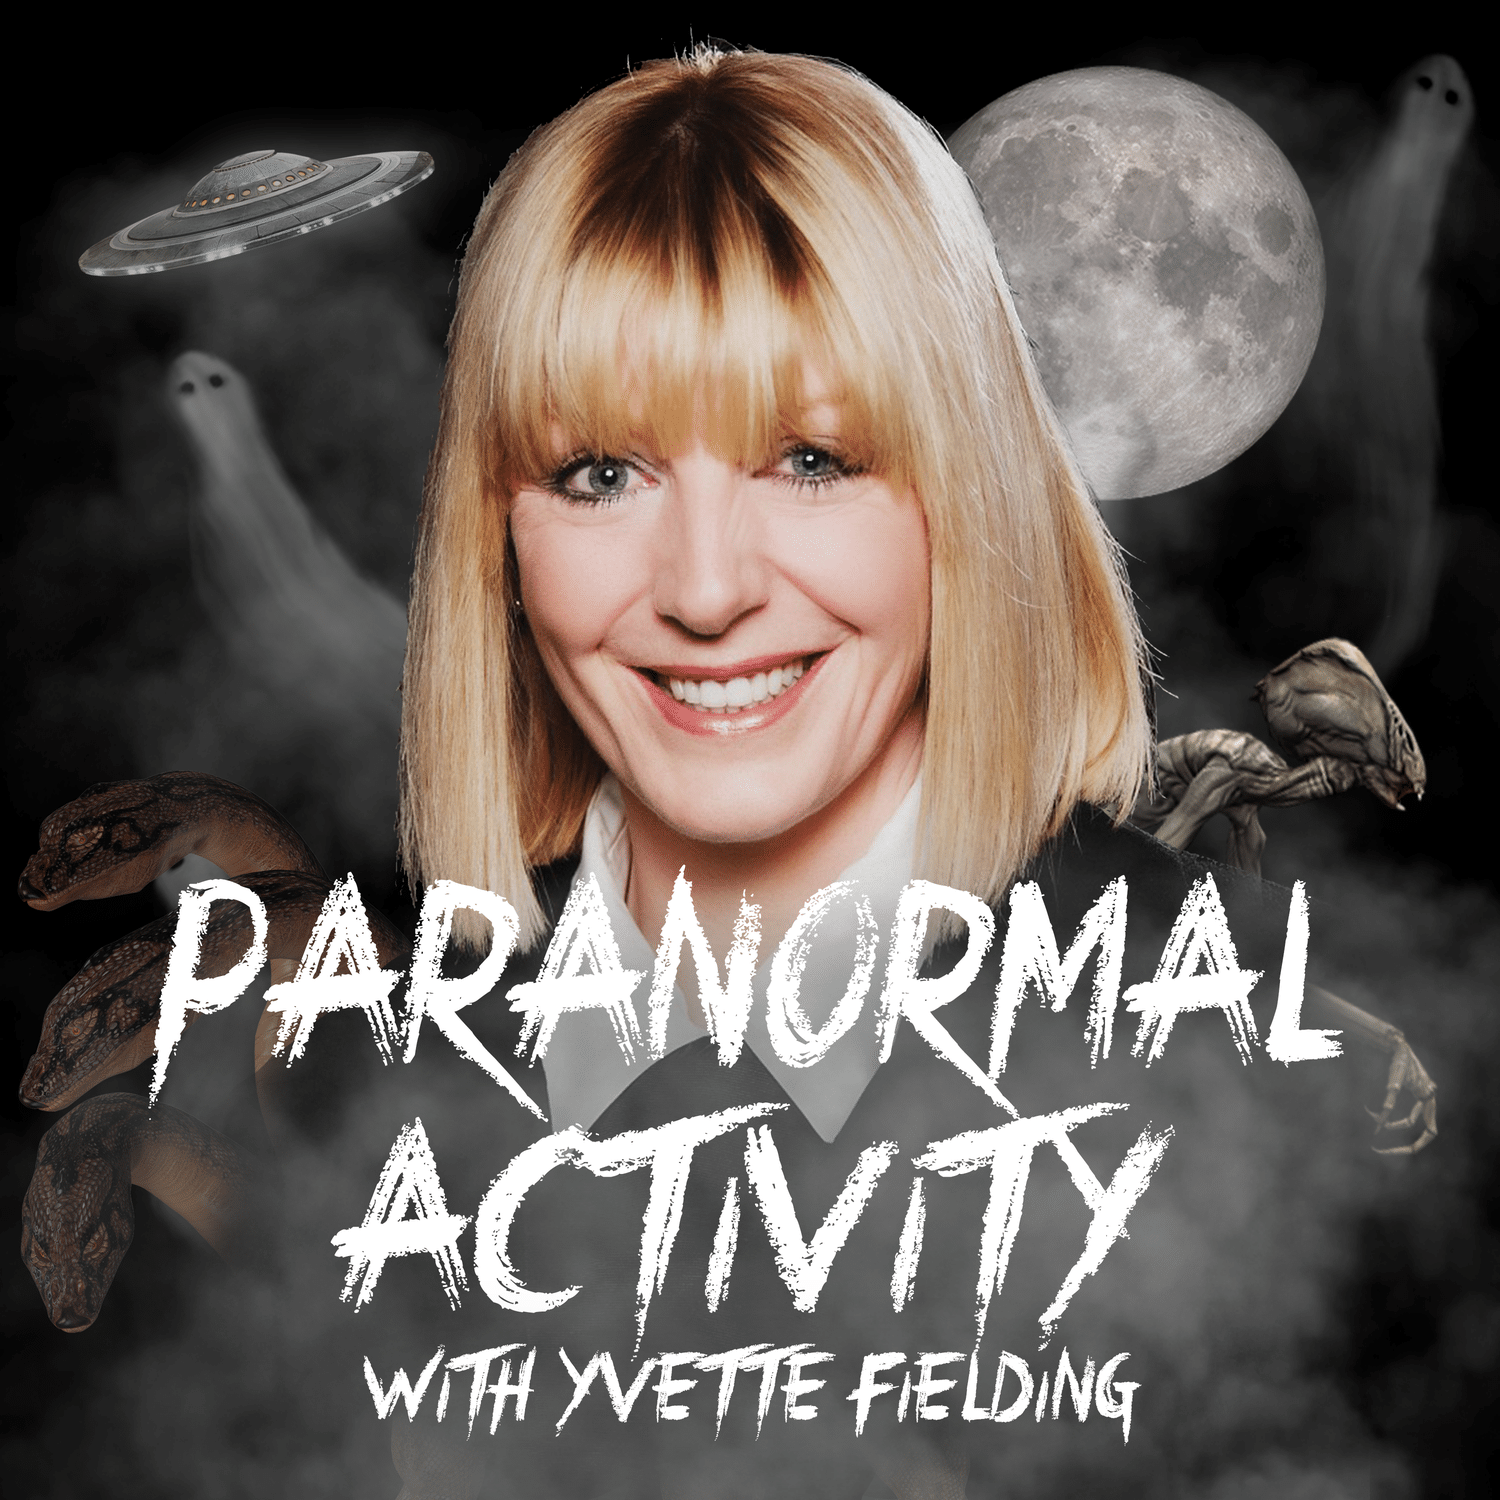 Paranormal Activity - Yvette Fielding